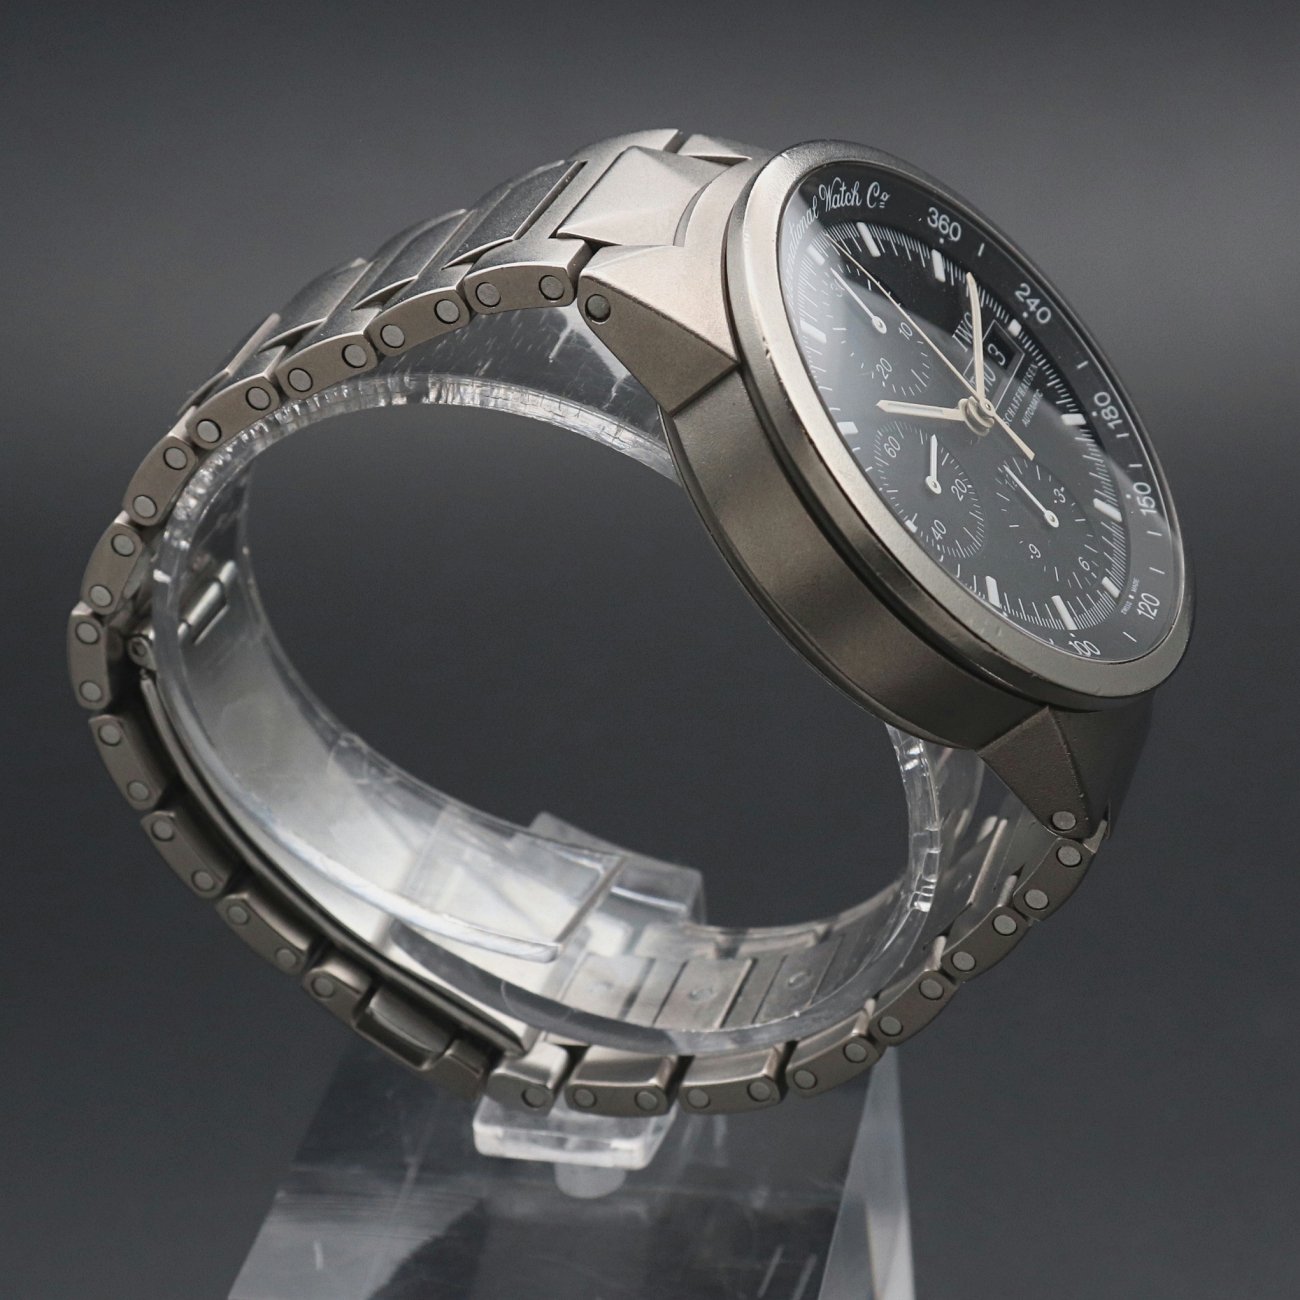 IWC メンズ腕時計 GST クロノグラフ IW372701 デイト表示 チタン ブラック文字盤 クォーツ 仕上げ済